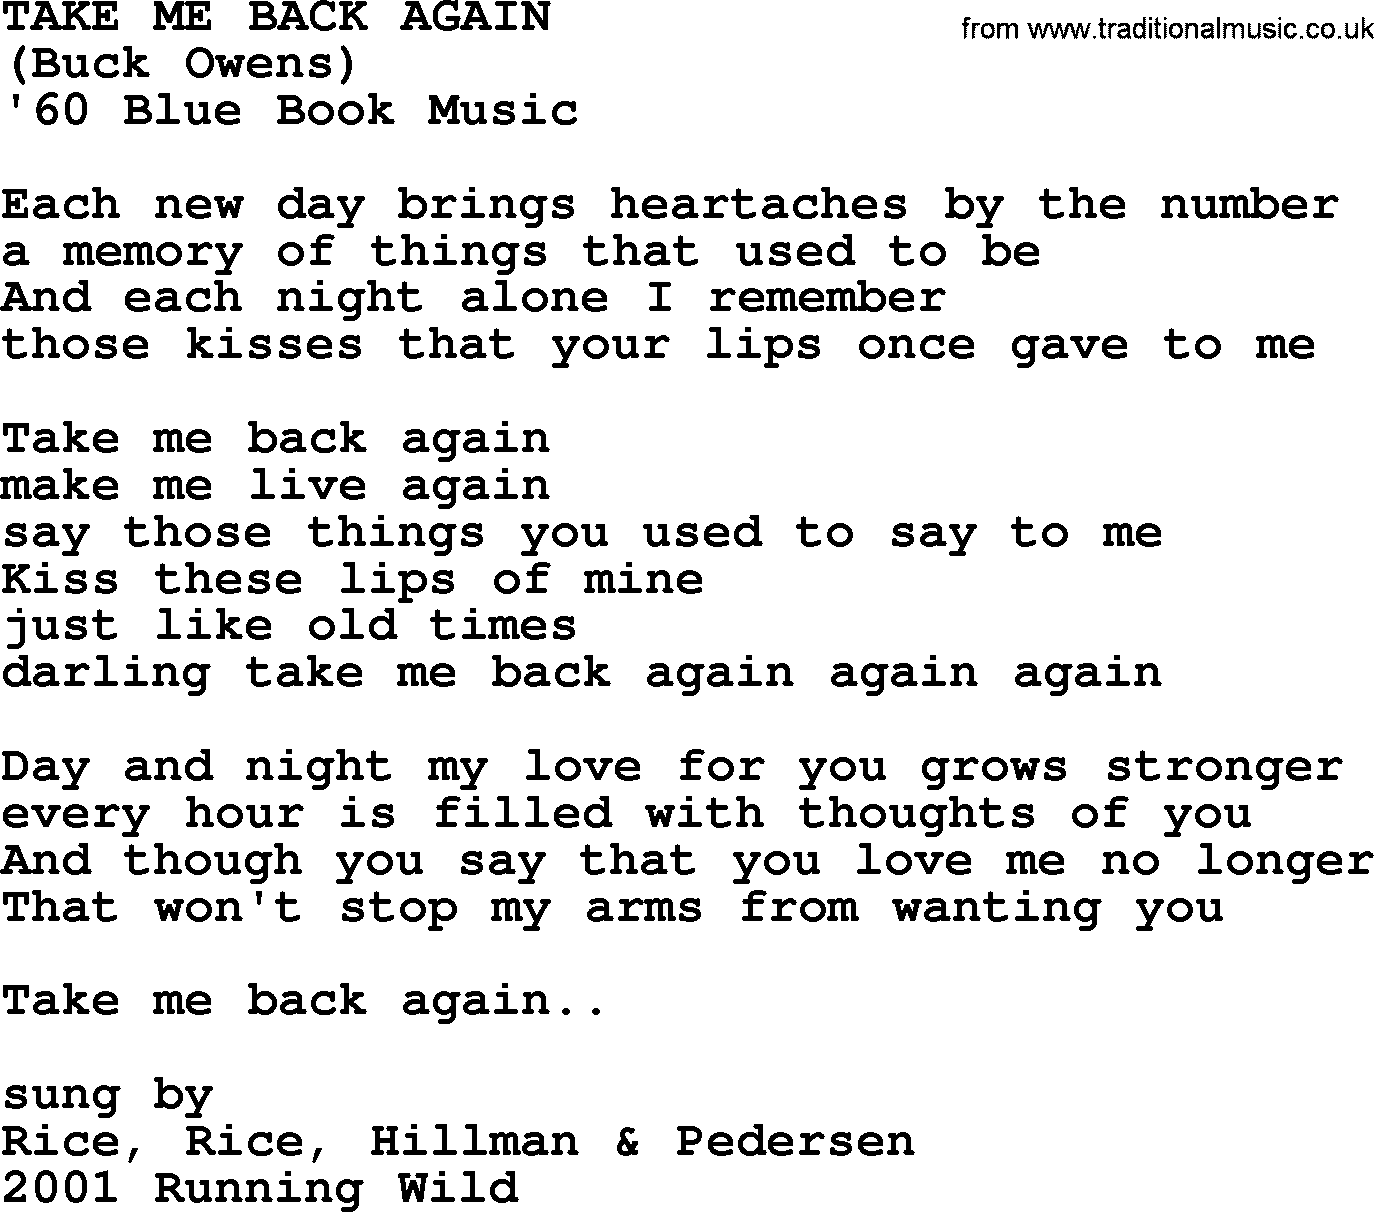 The Byrds song Take Me Back Again, lyrics